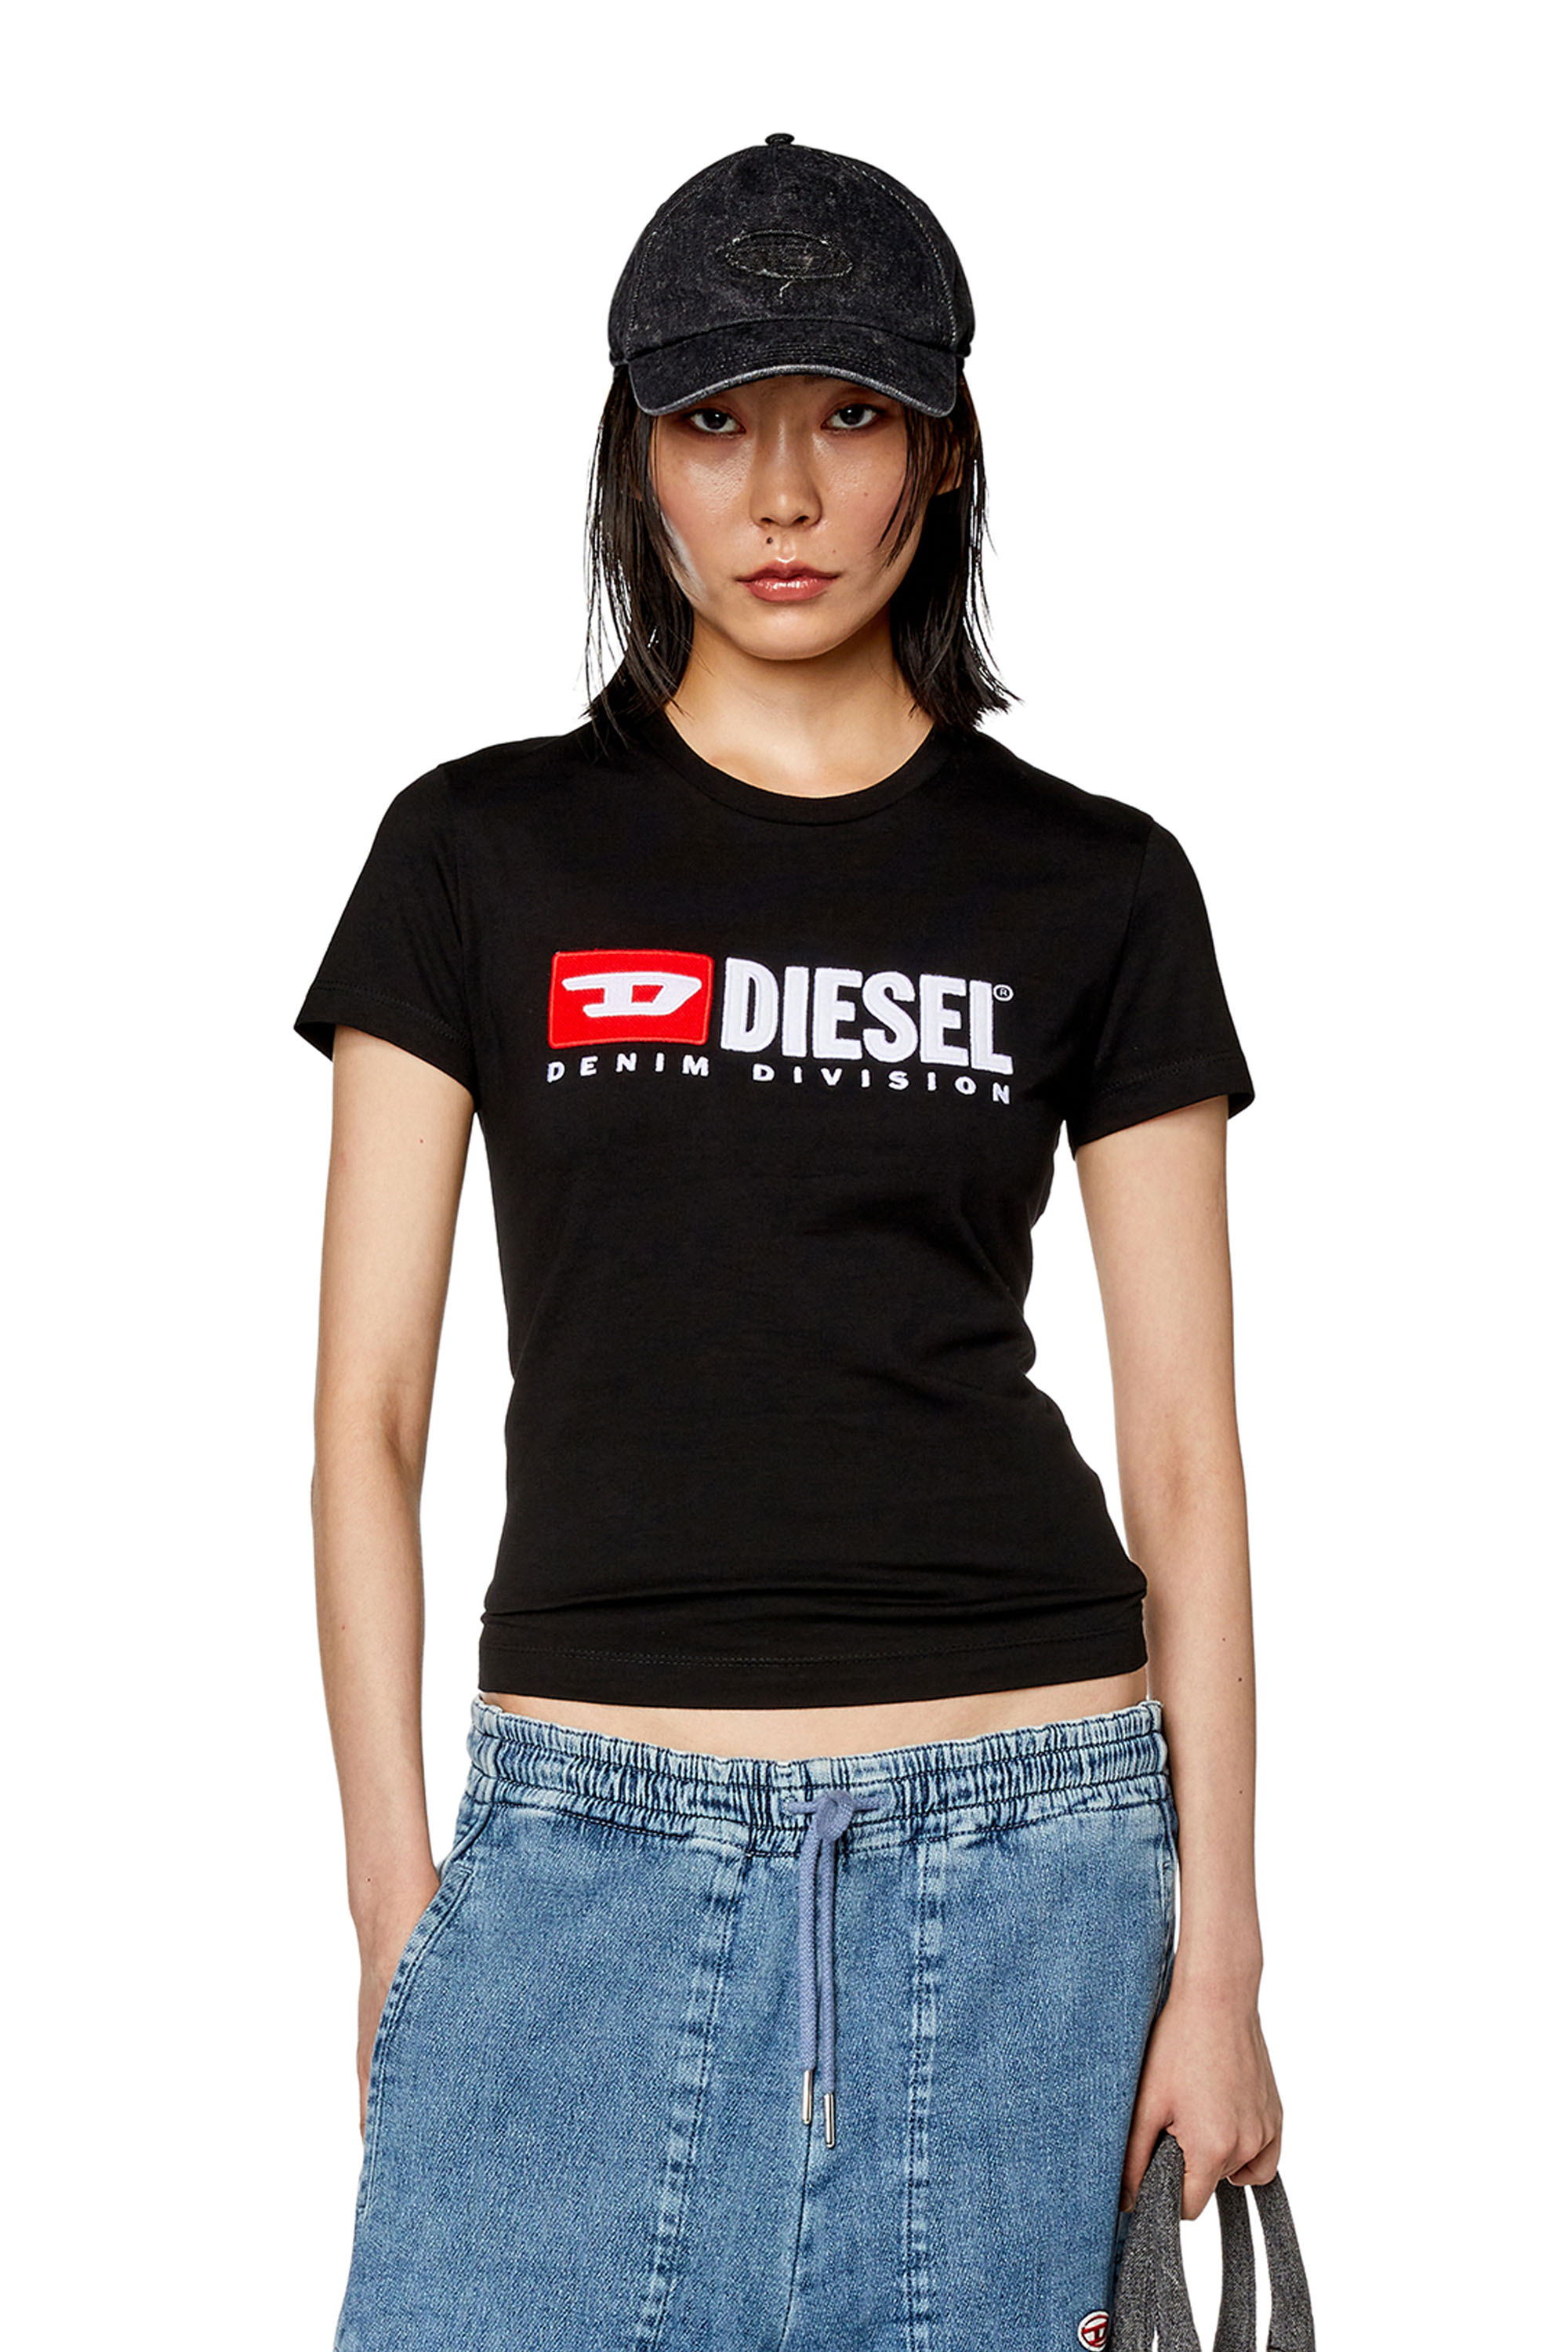 Diesel - T-SLI-DIV, Black - Image 1